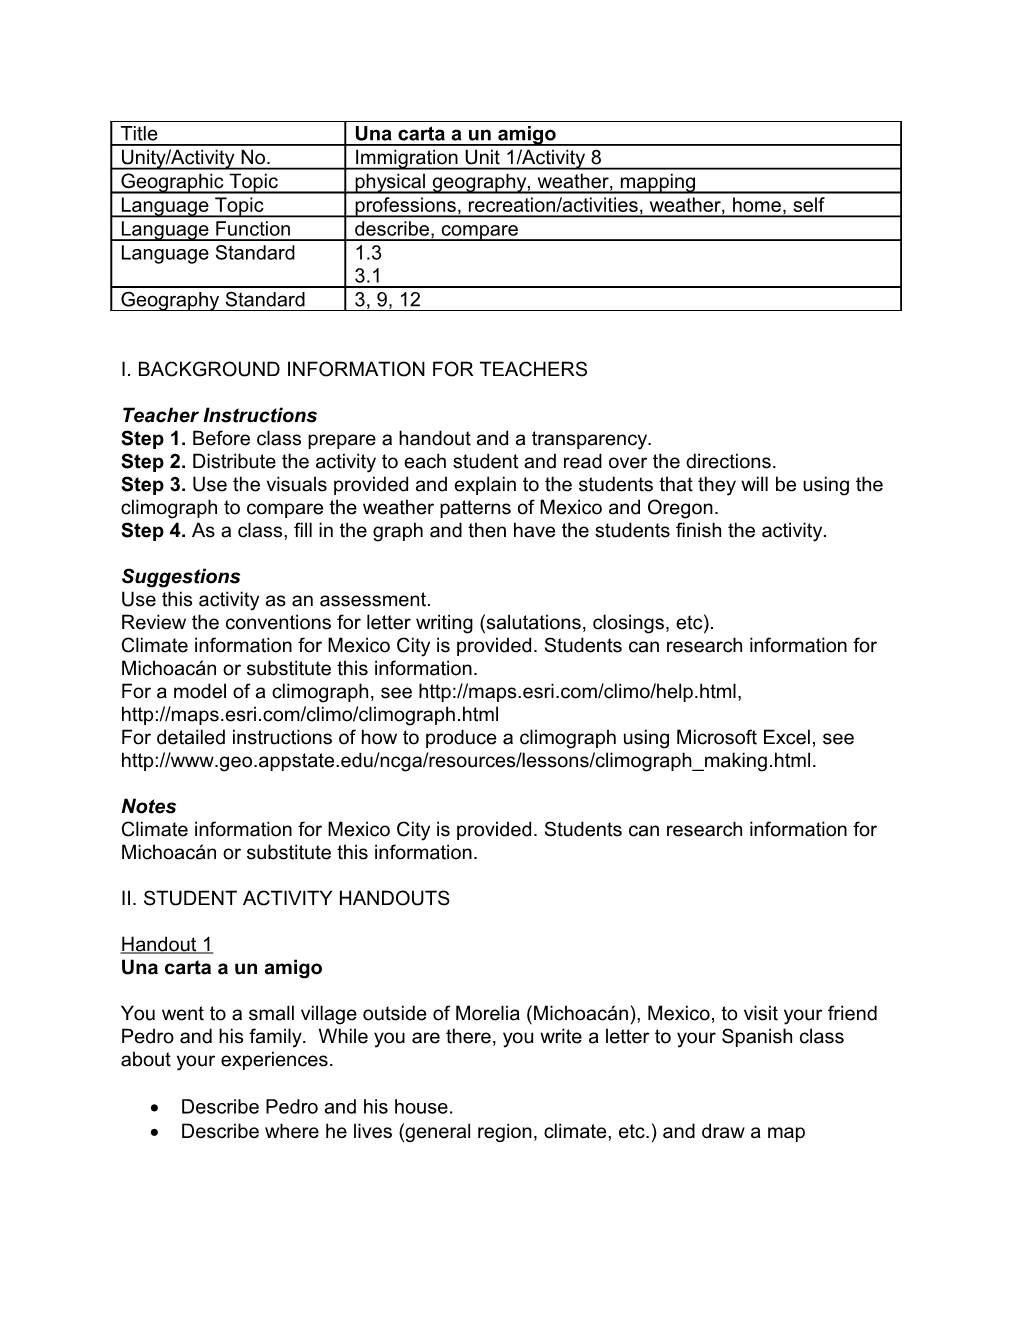 I. Background Information for Teachers s1